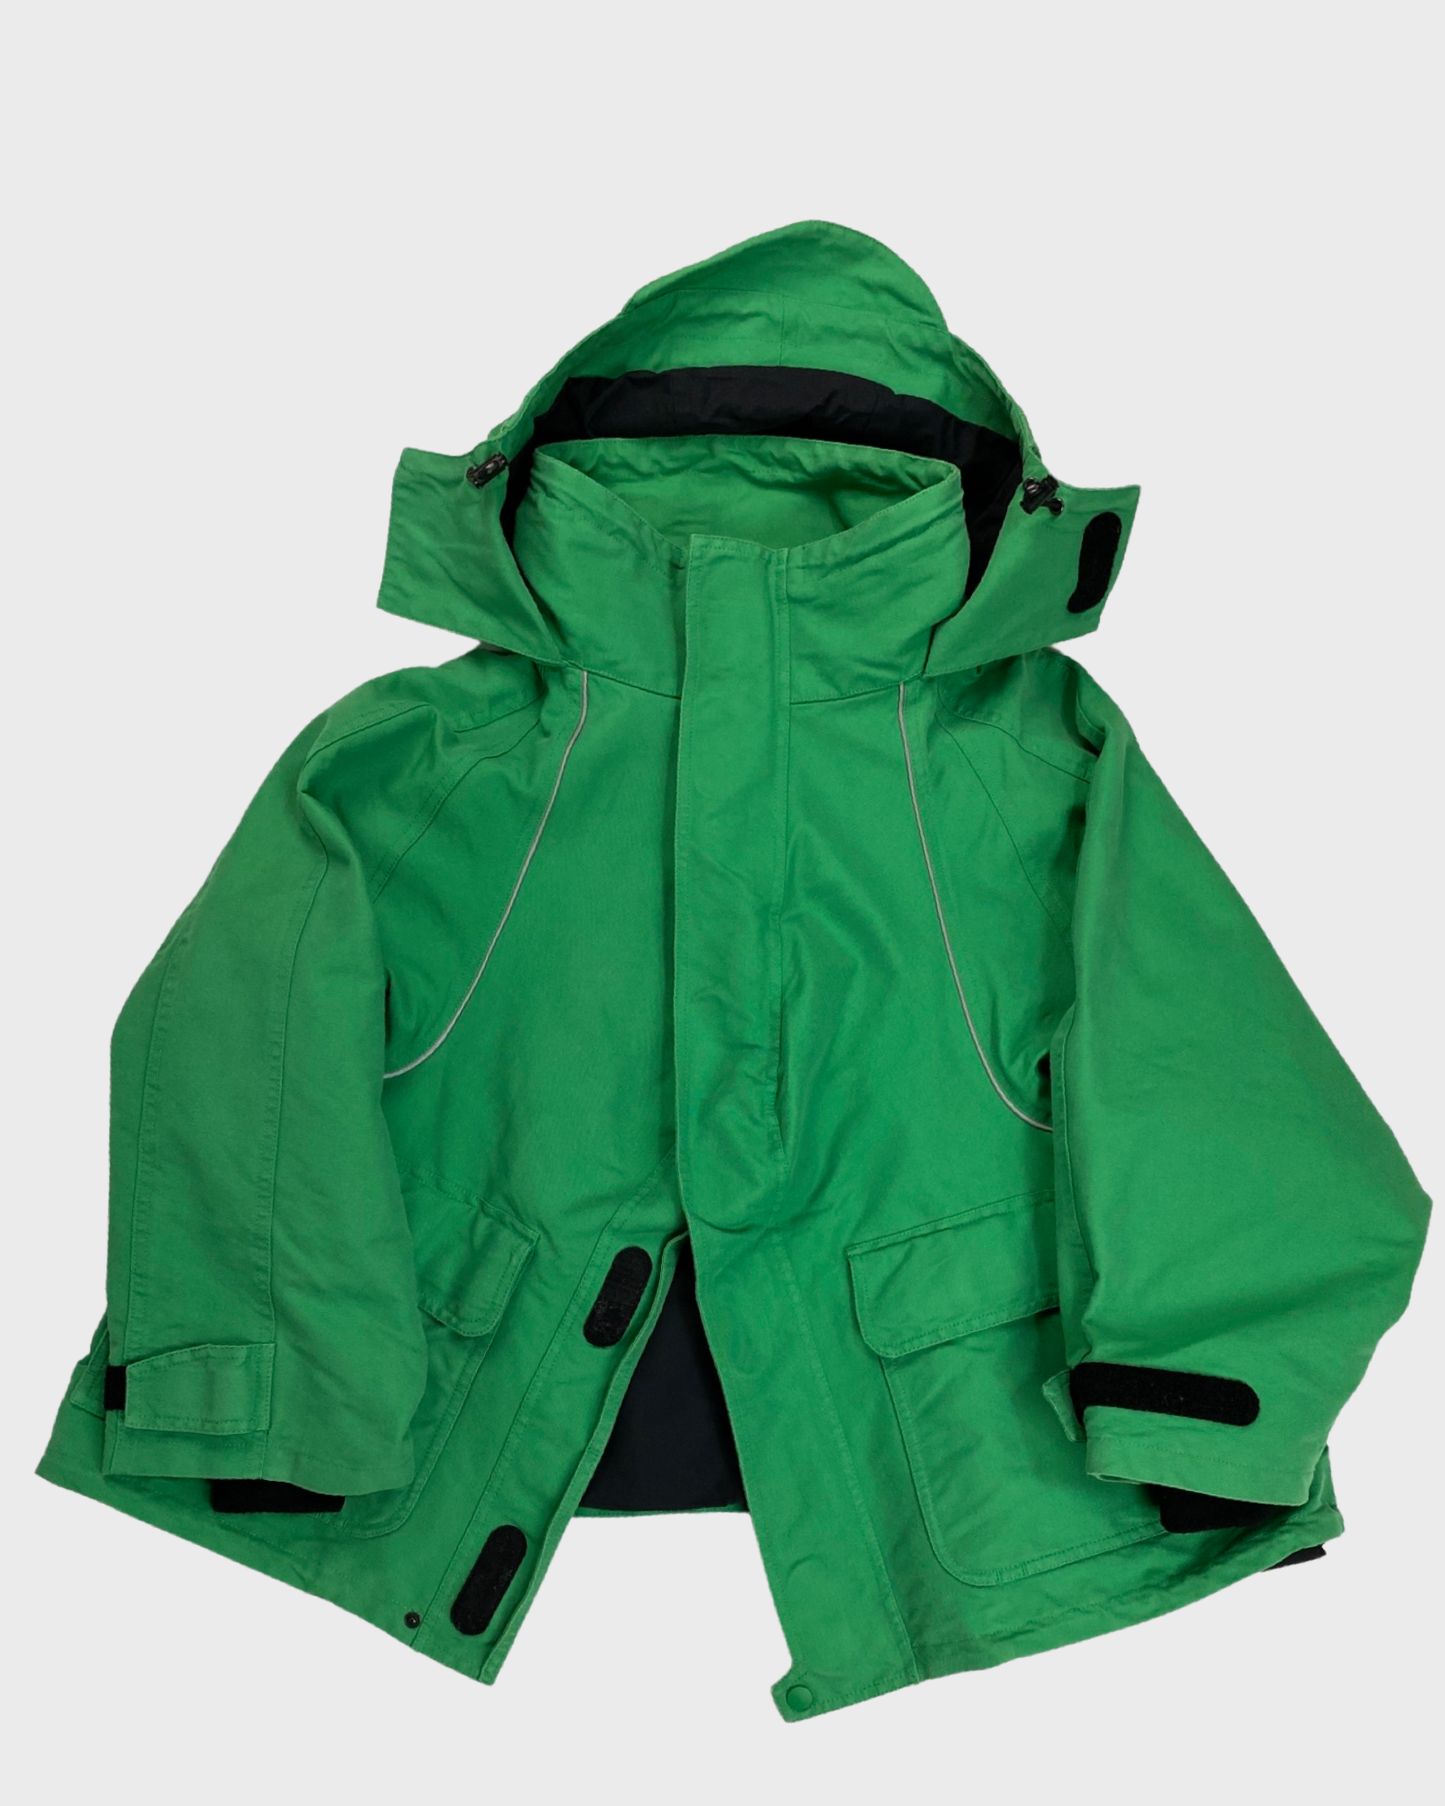 BALENCIAGA green swing parka jacket SZ:38